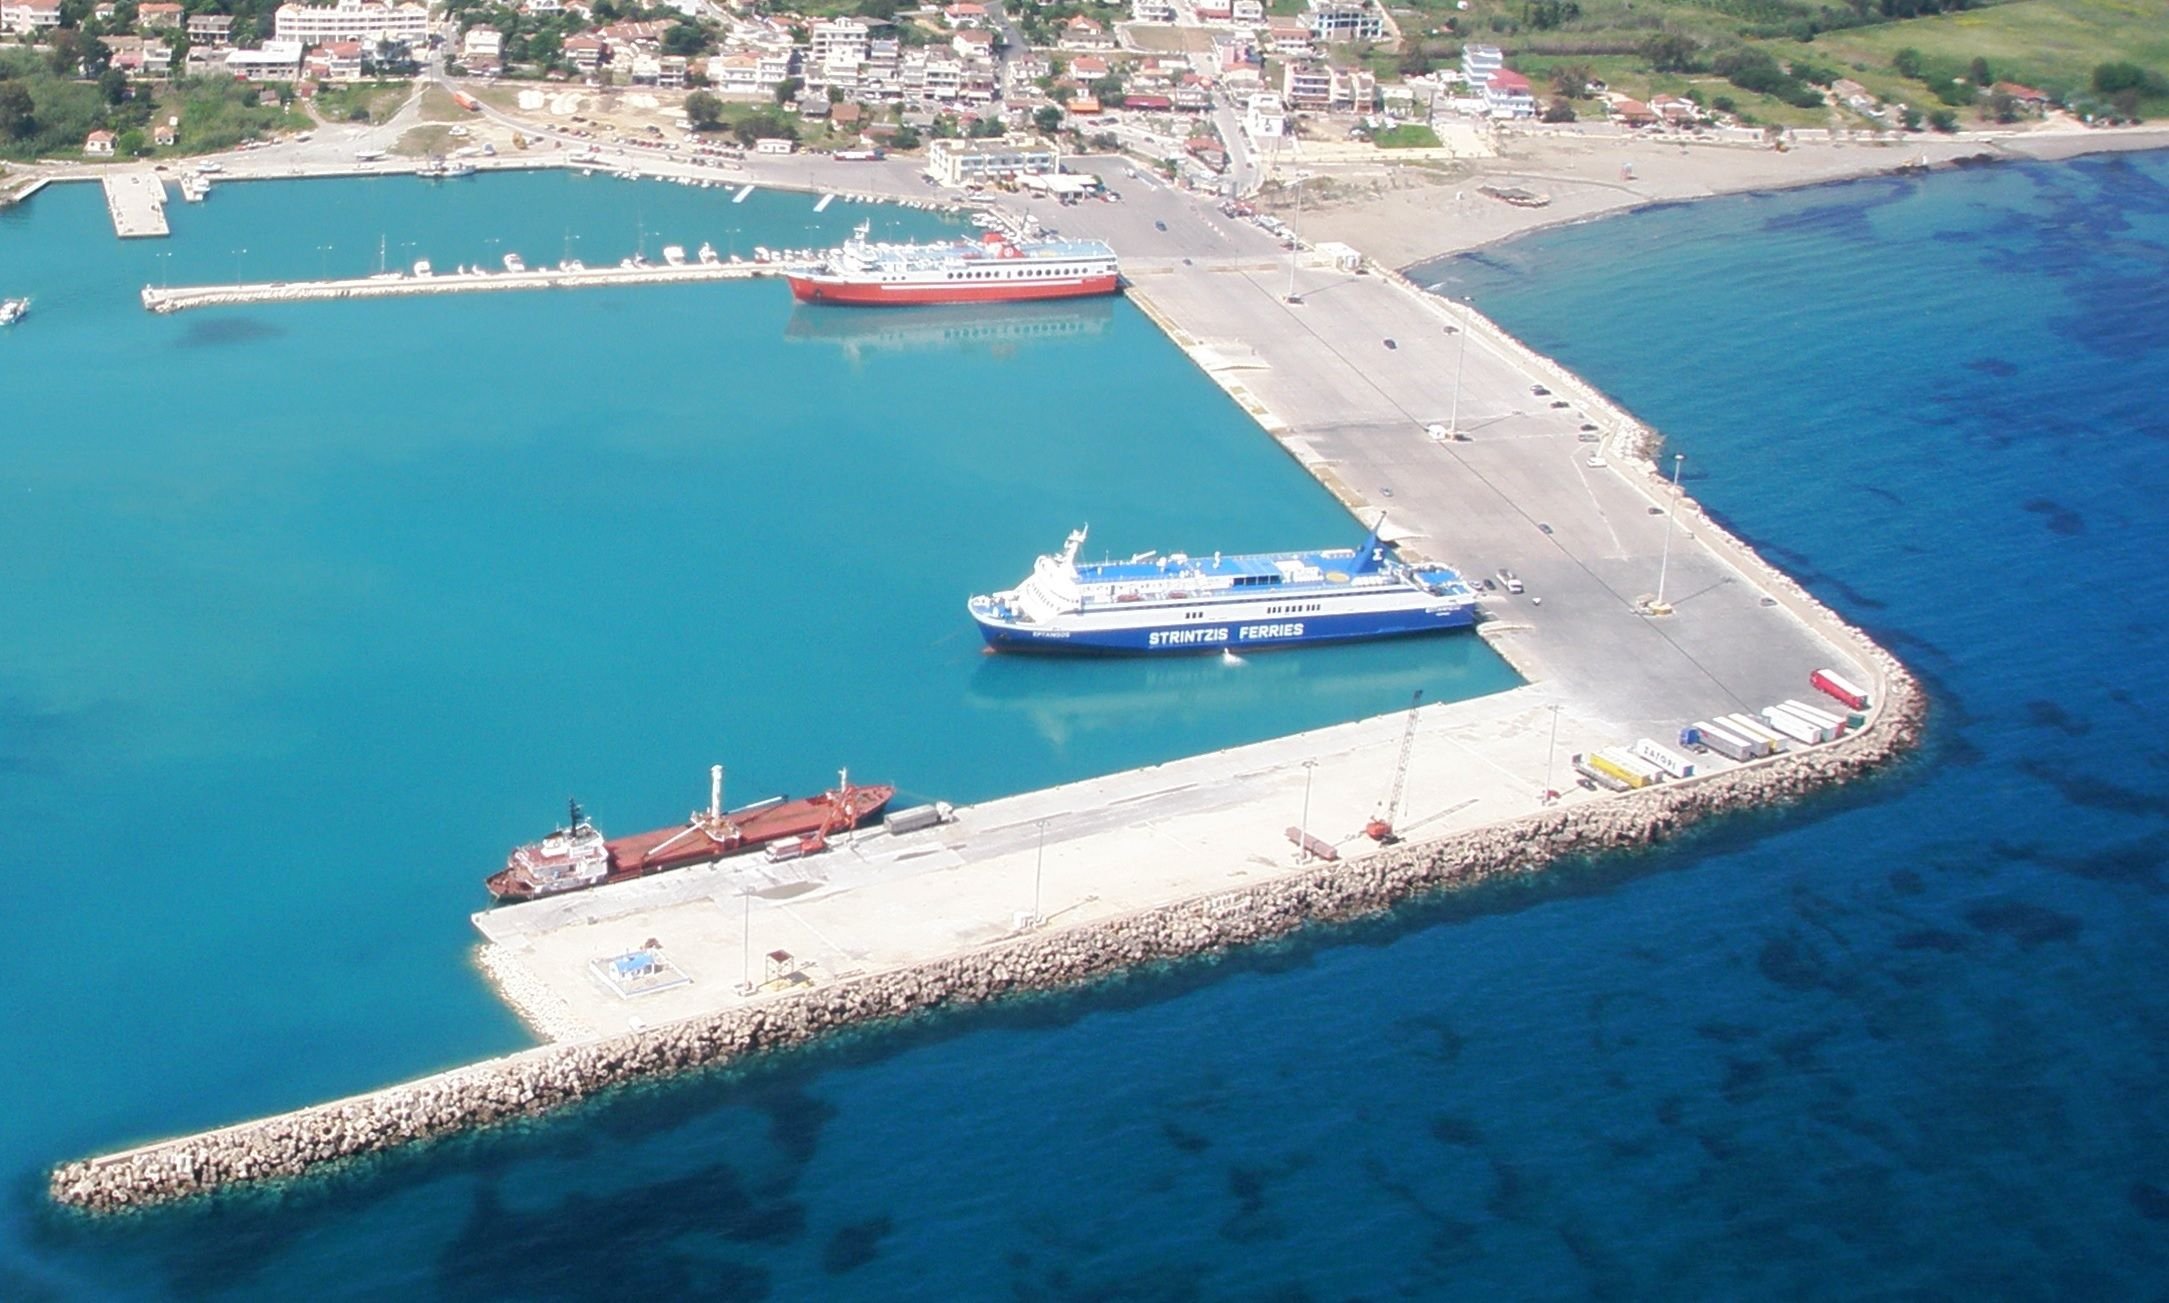 More information about "Λιμάνι Κυλλήνης: Εγκαίνια για την πρώτη υποδομή ηλεκτροδότησης πλοίων στην Αν. Μεσόγειο"